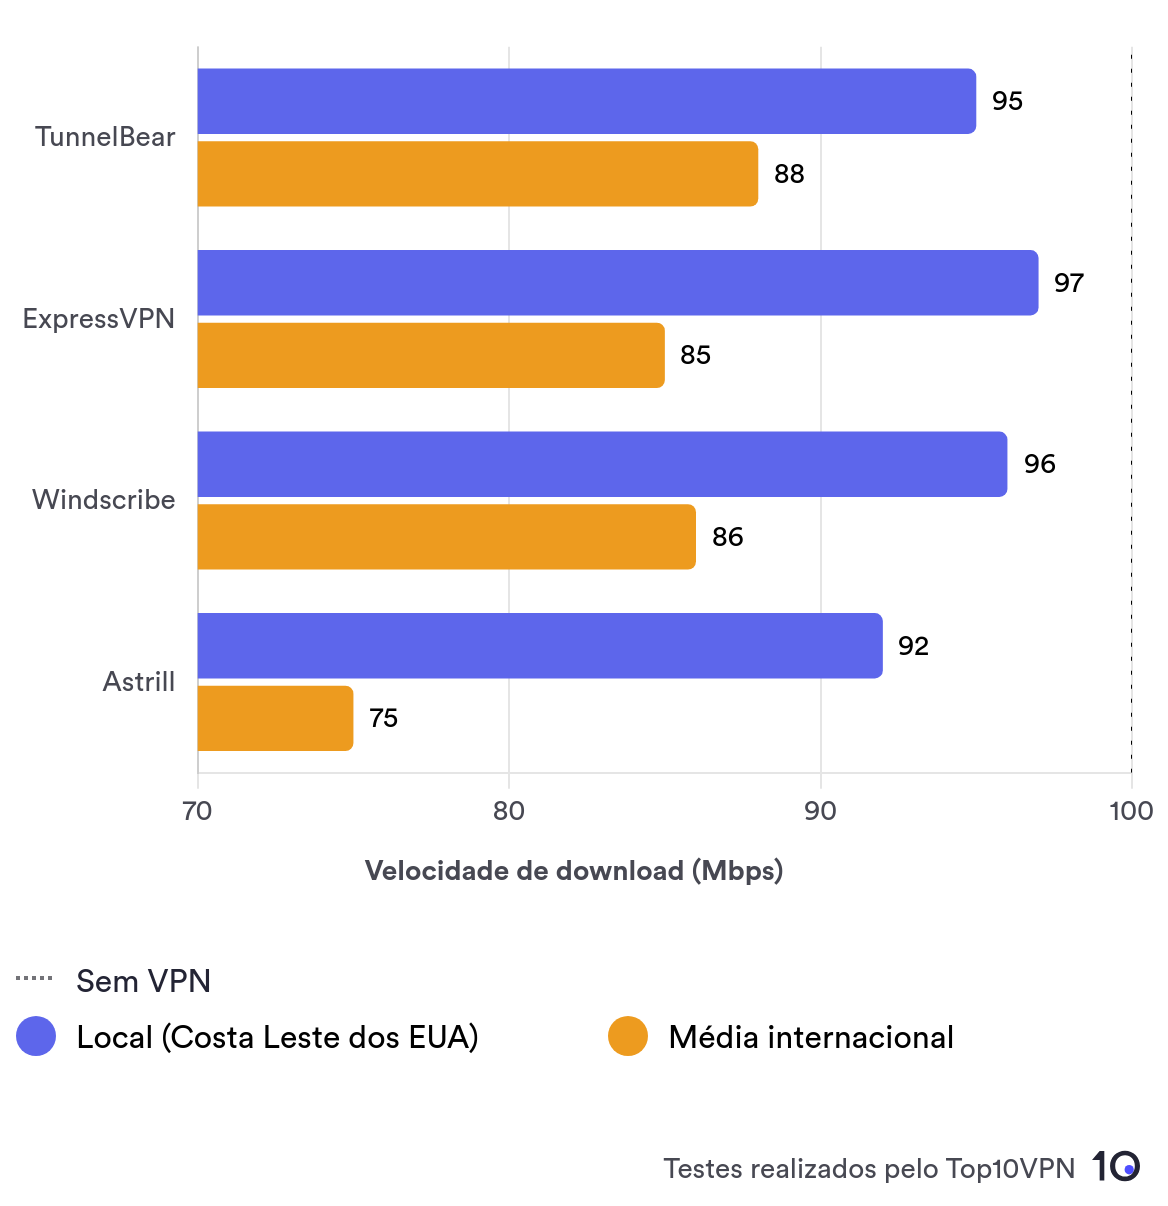 Gráfico de barras comparando o desempenho de velocidade local da TunnelBear com outras VPNs líderes de mercado.